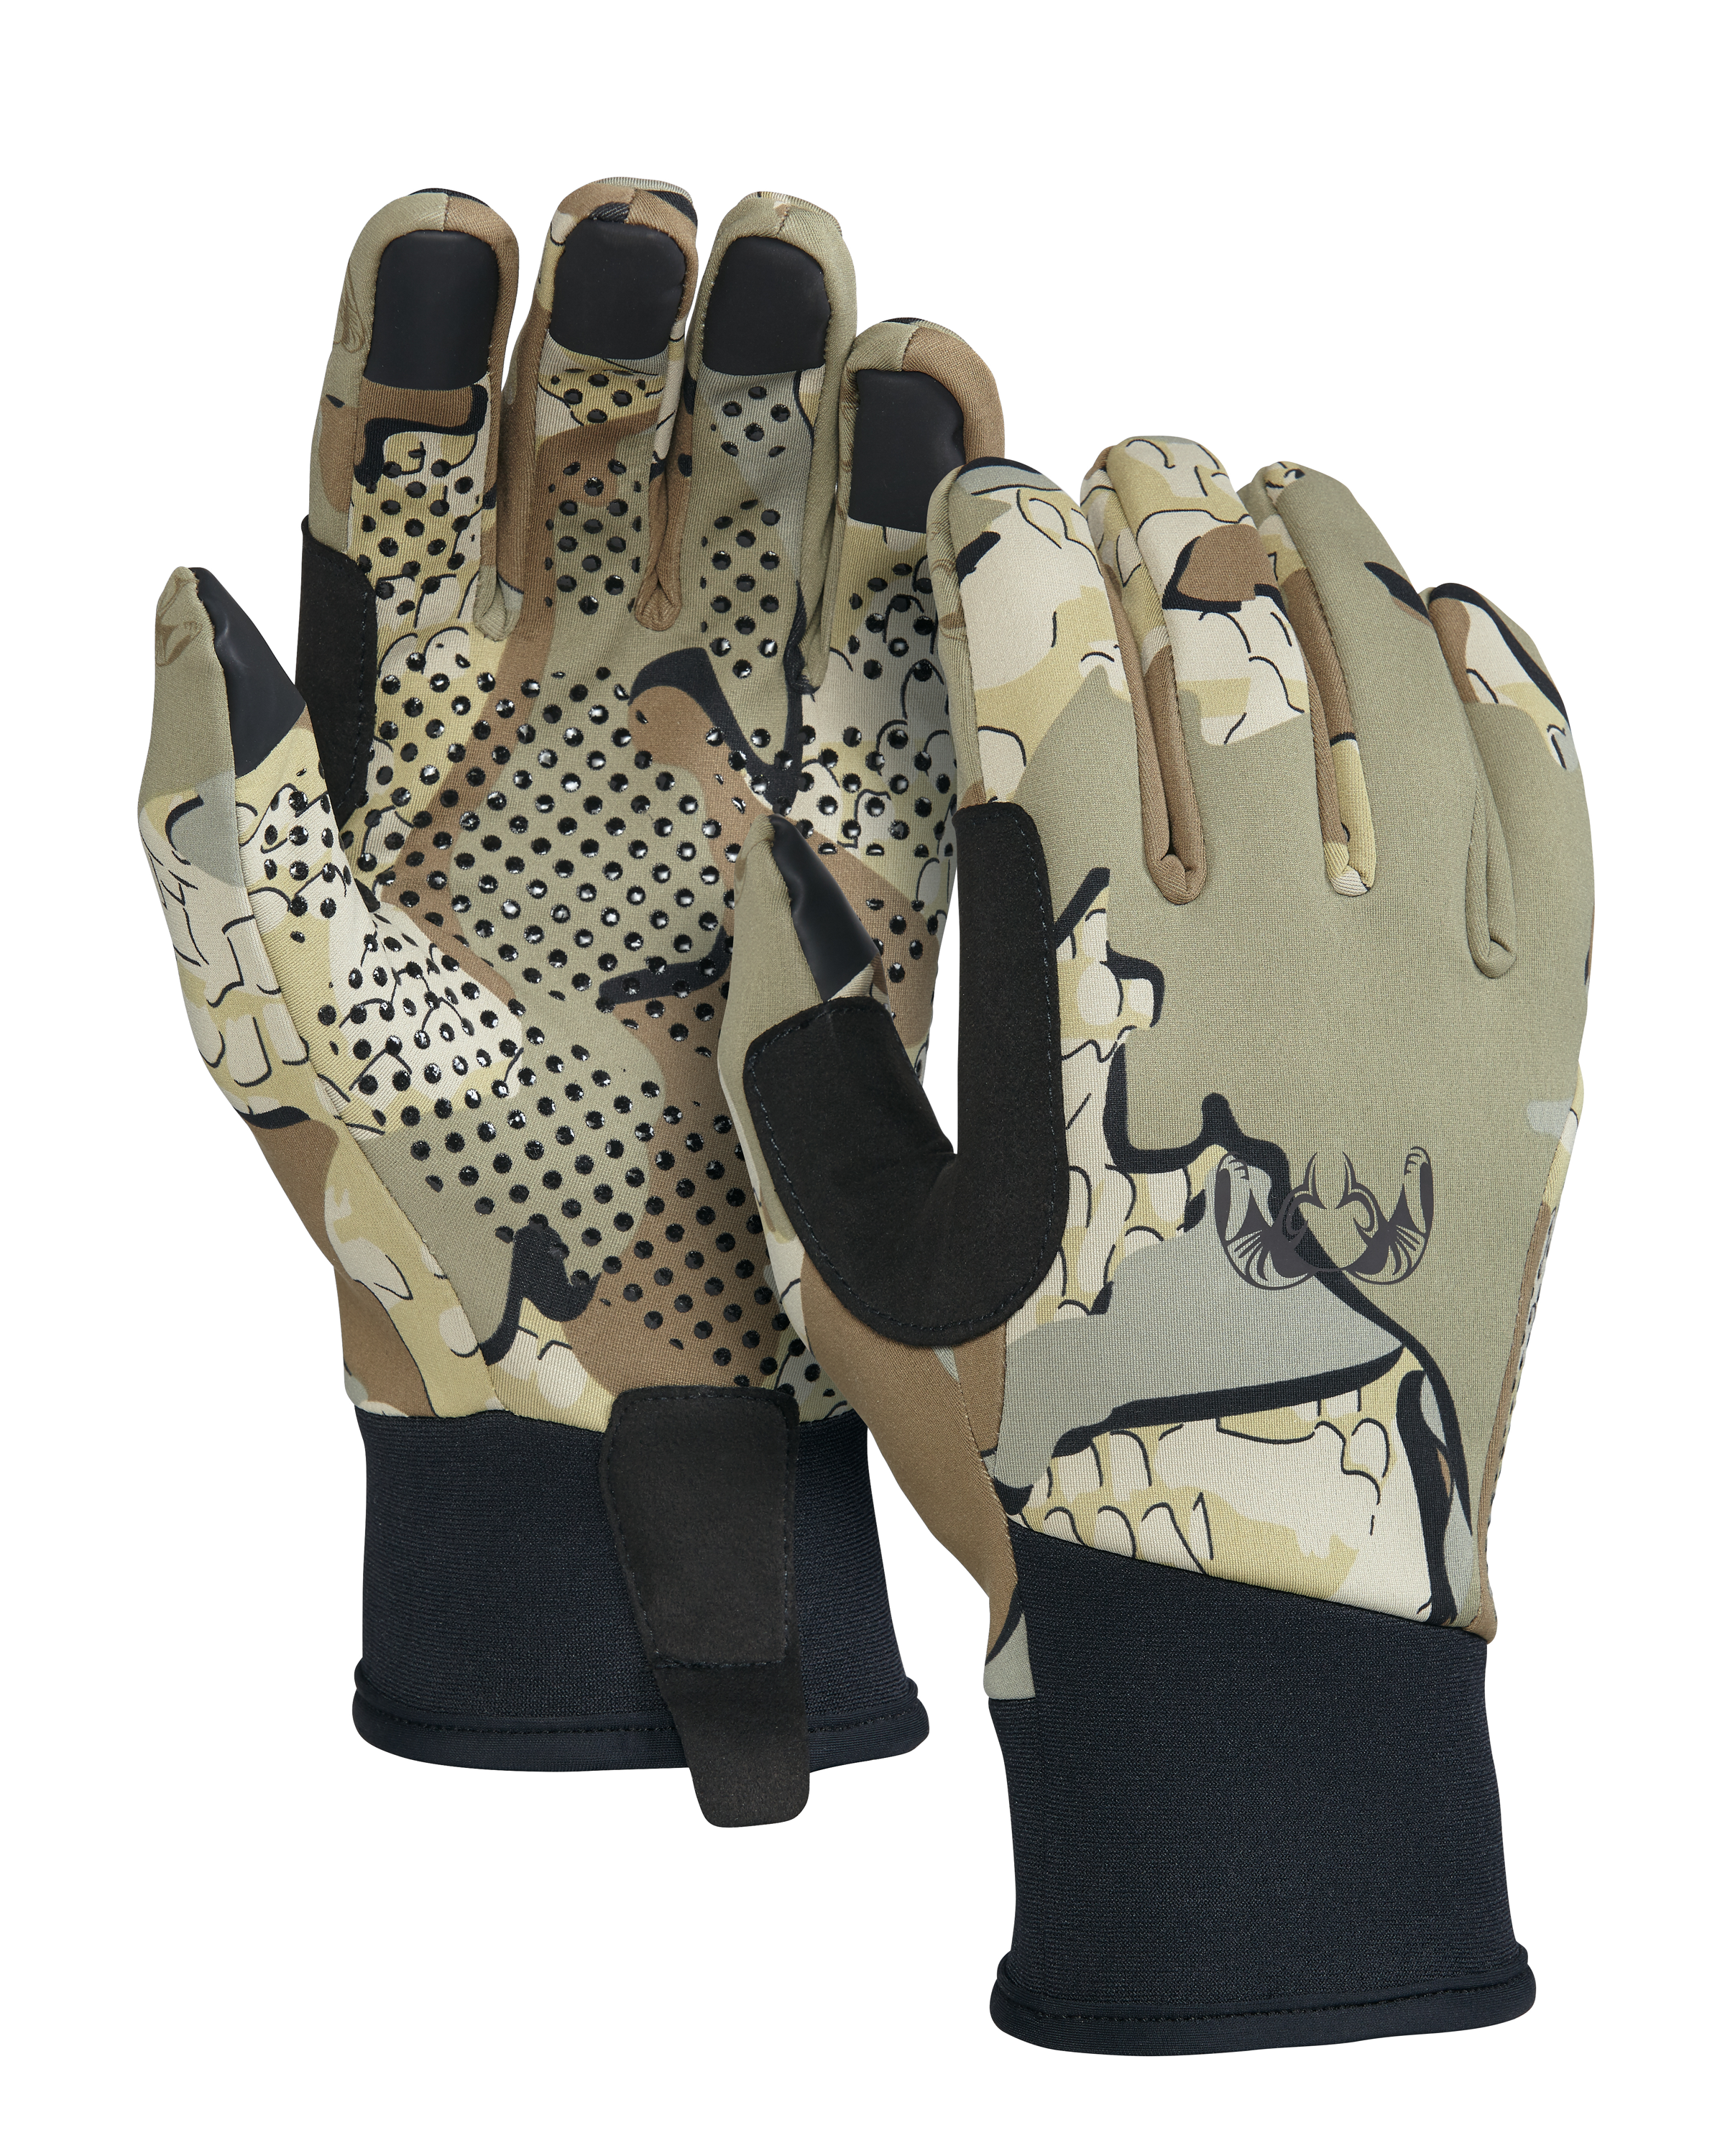 KUIU Axis Hunting Glove in Valo | Size Medium